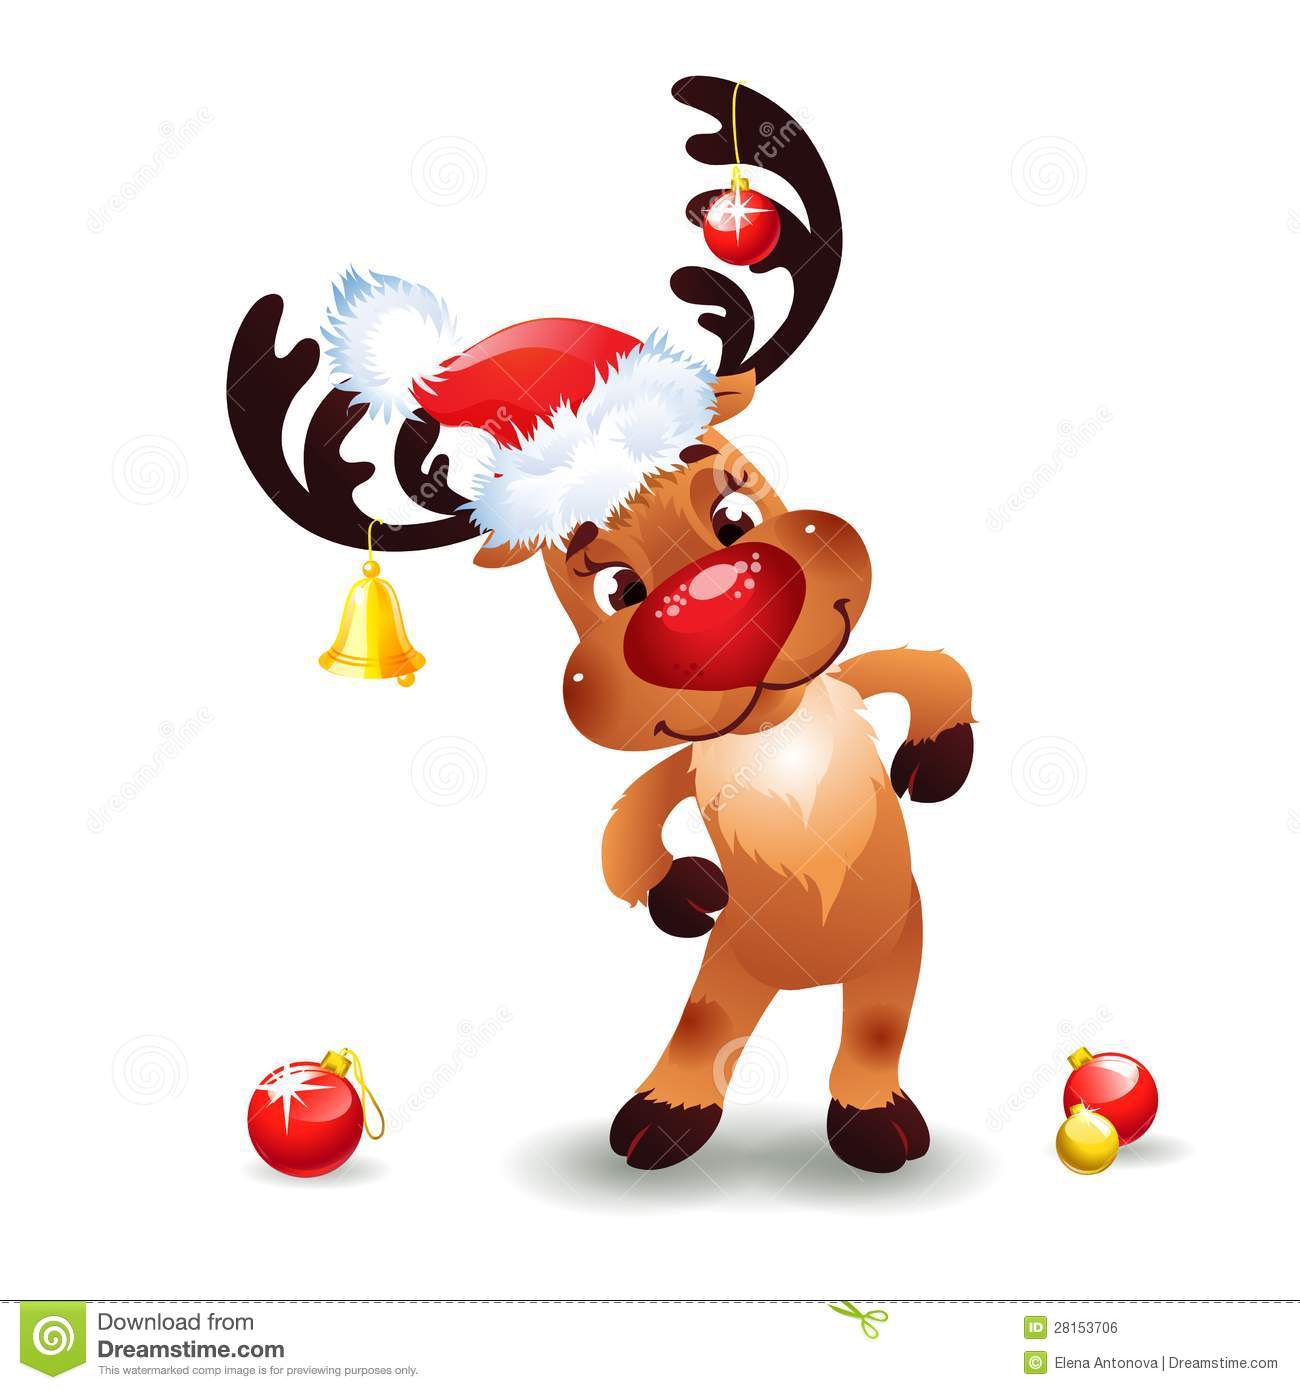 Funny Reindeer Christmas Royalty Free Stock Image   Image  28153706